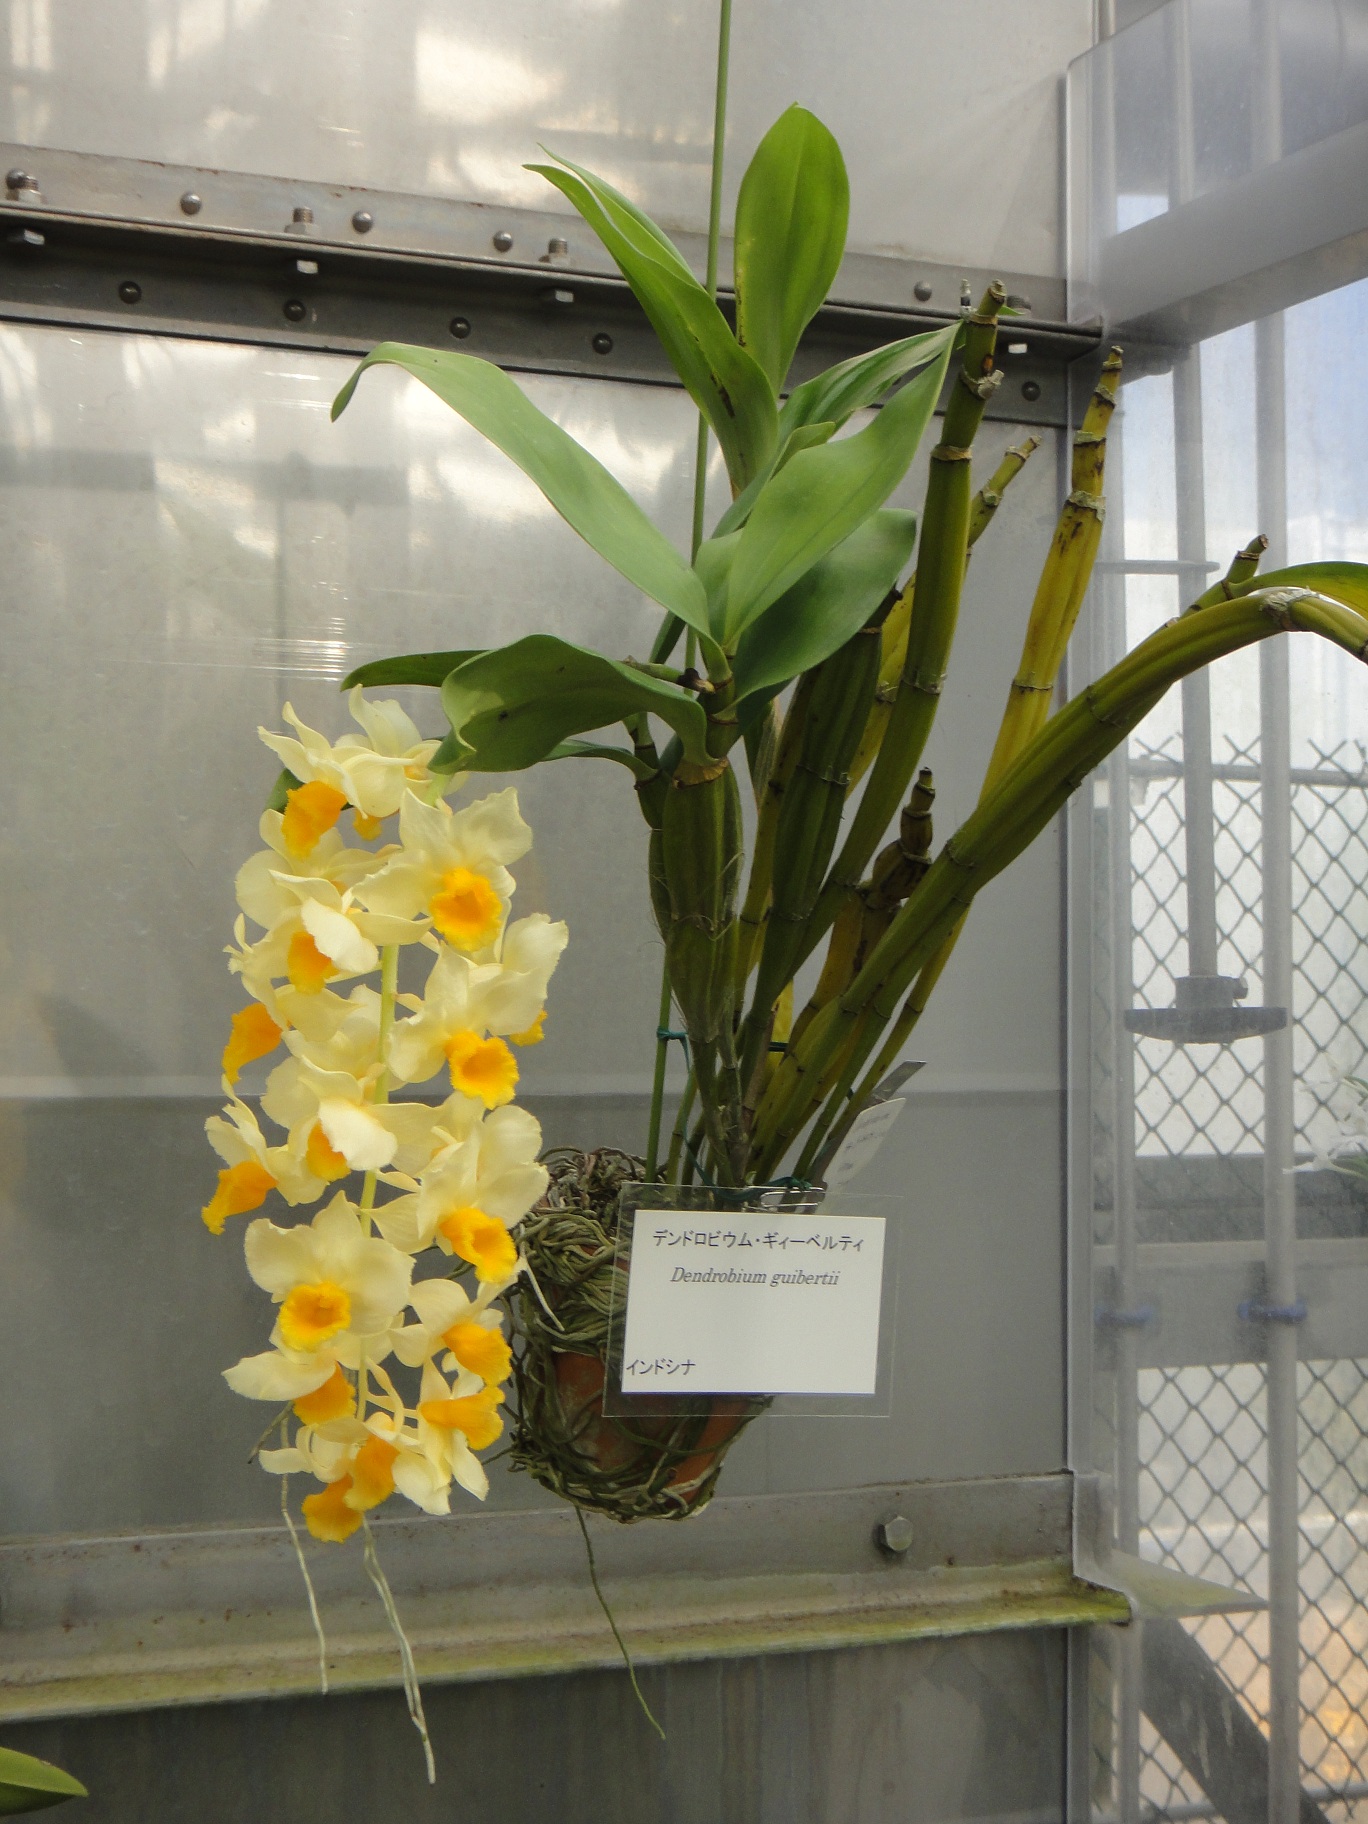 http://orchids.la.coocan.jp/Dendrobium/Dendrobium%20guibertii/DSC04001.JPG